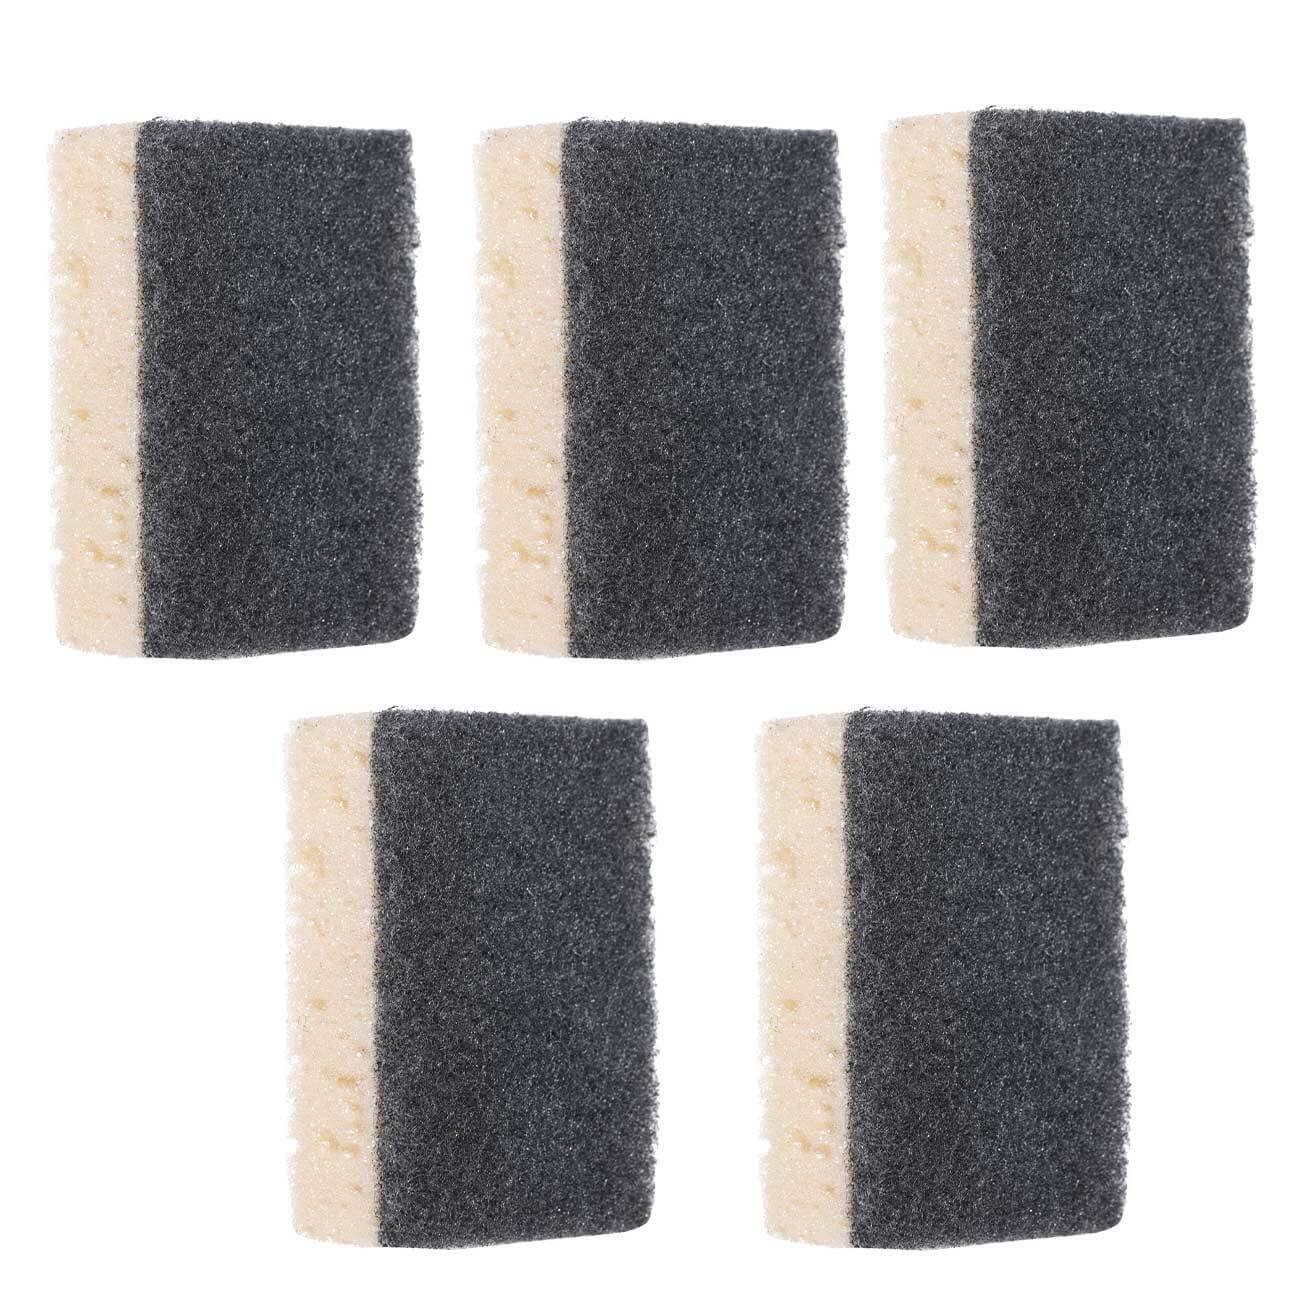 Dish washing sponge, 10x7 cm, 5 pcs, foam rubber / abrasive, black and beige, Black clean изображение № 1